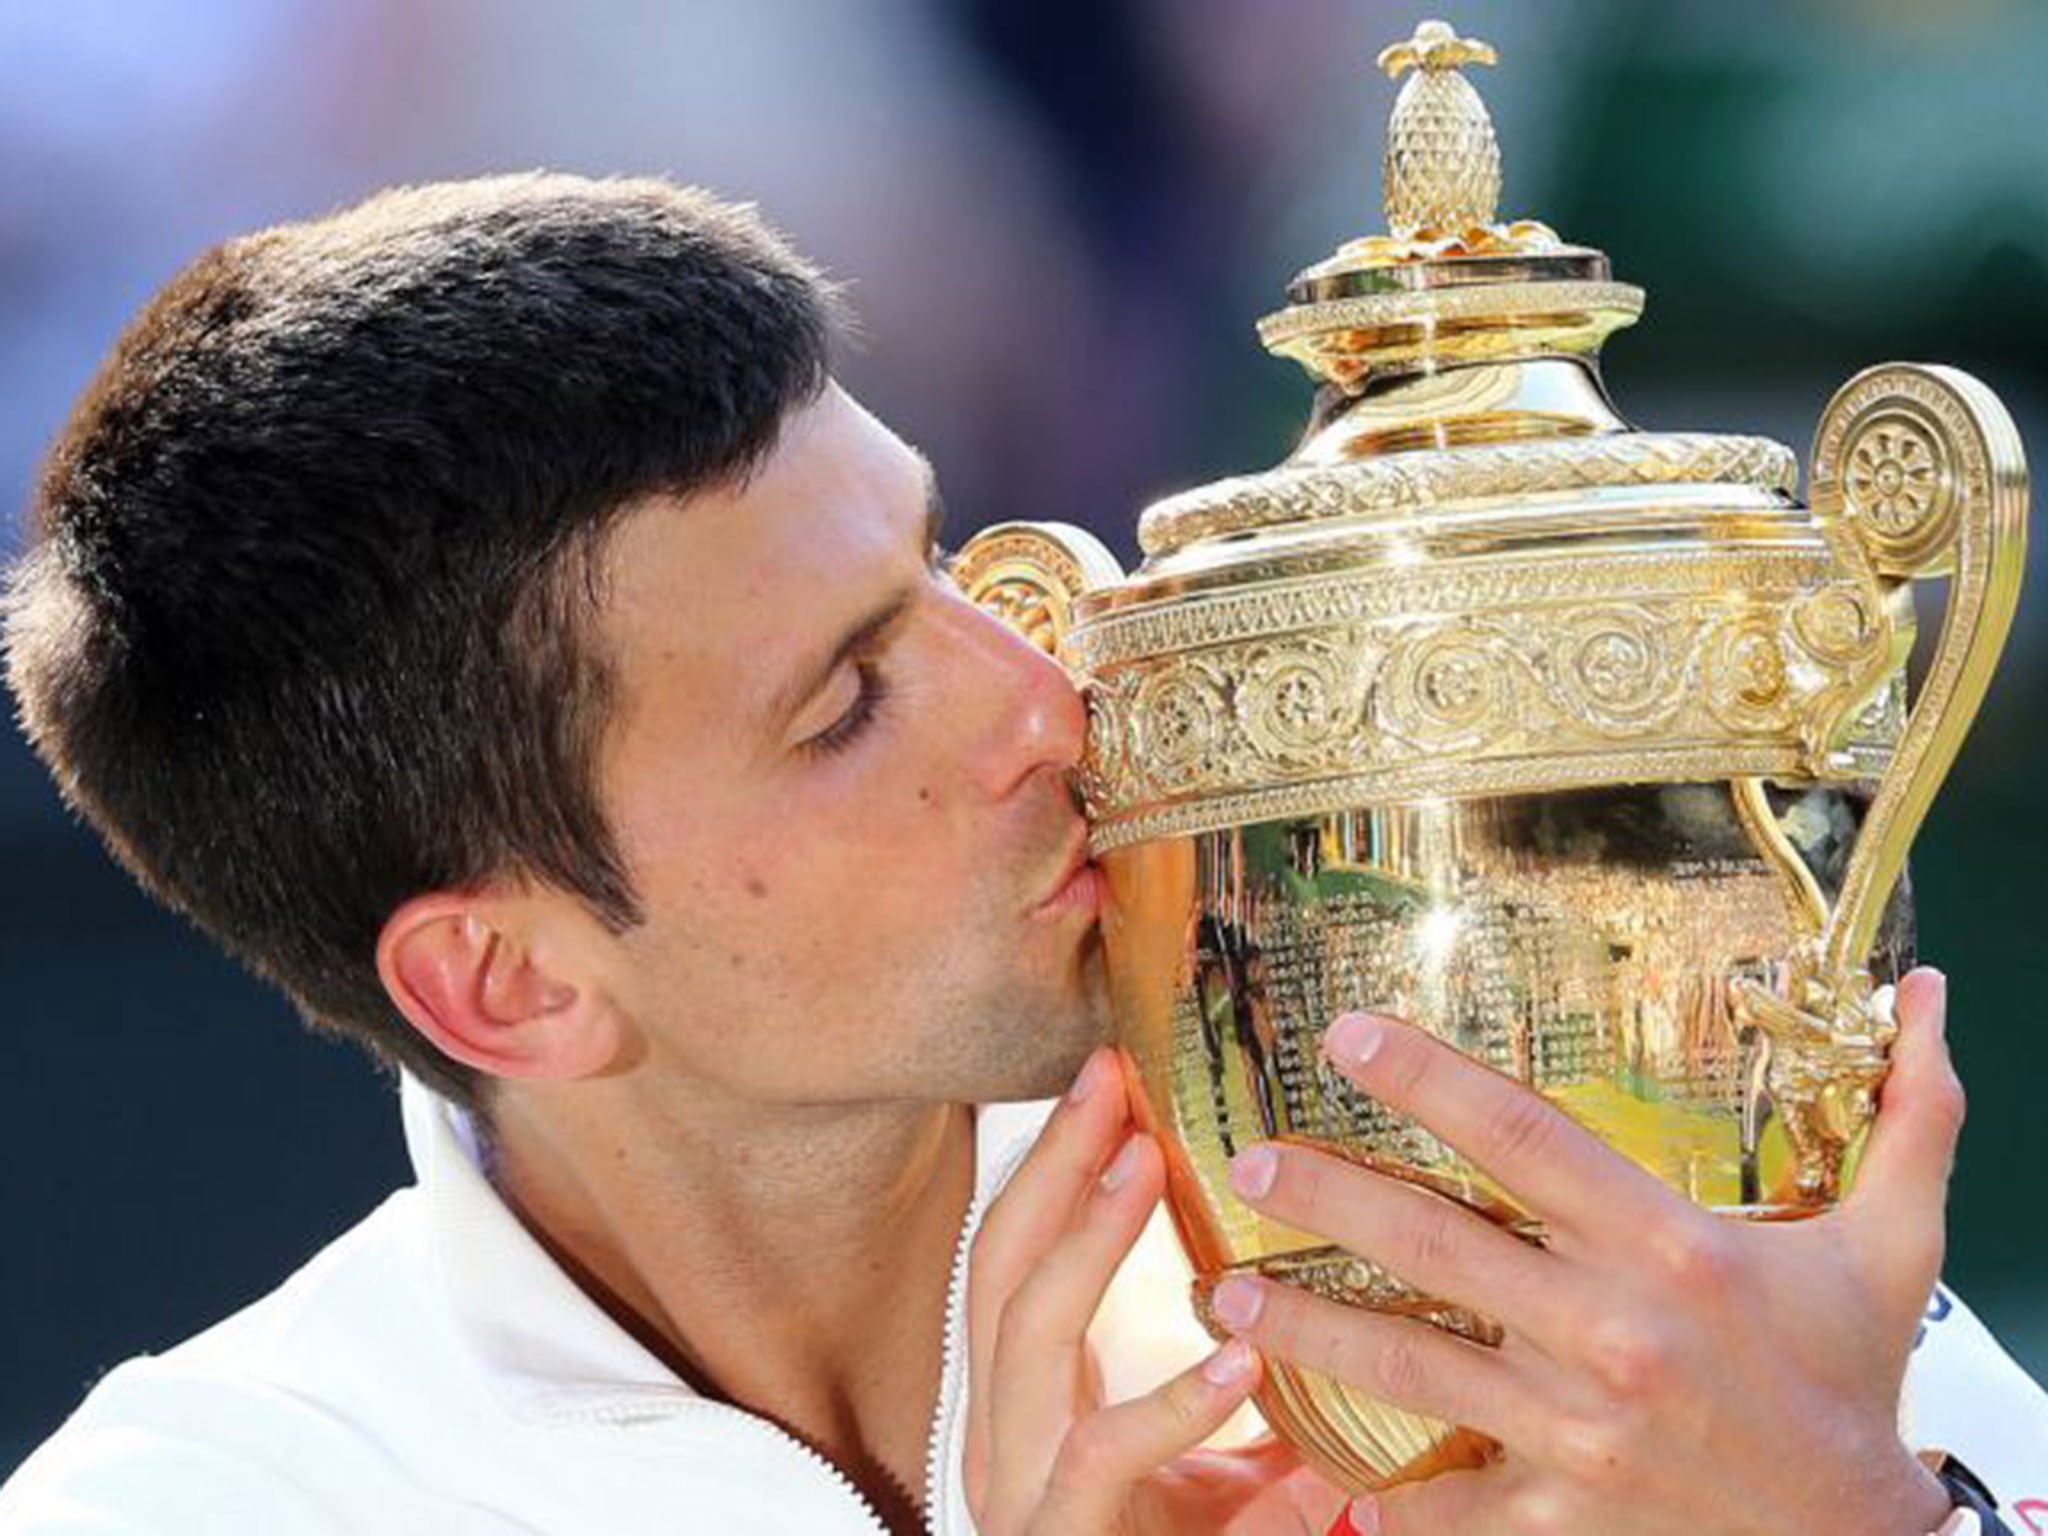 Djokovic kisses the Wimbledon trophy after defeating Roger Federer